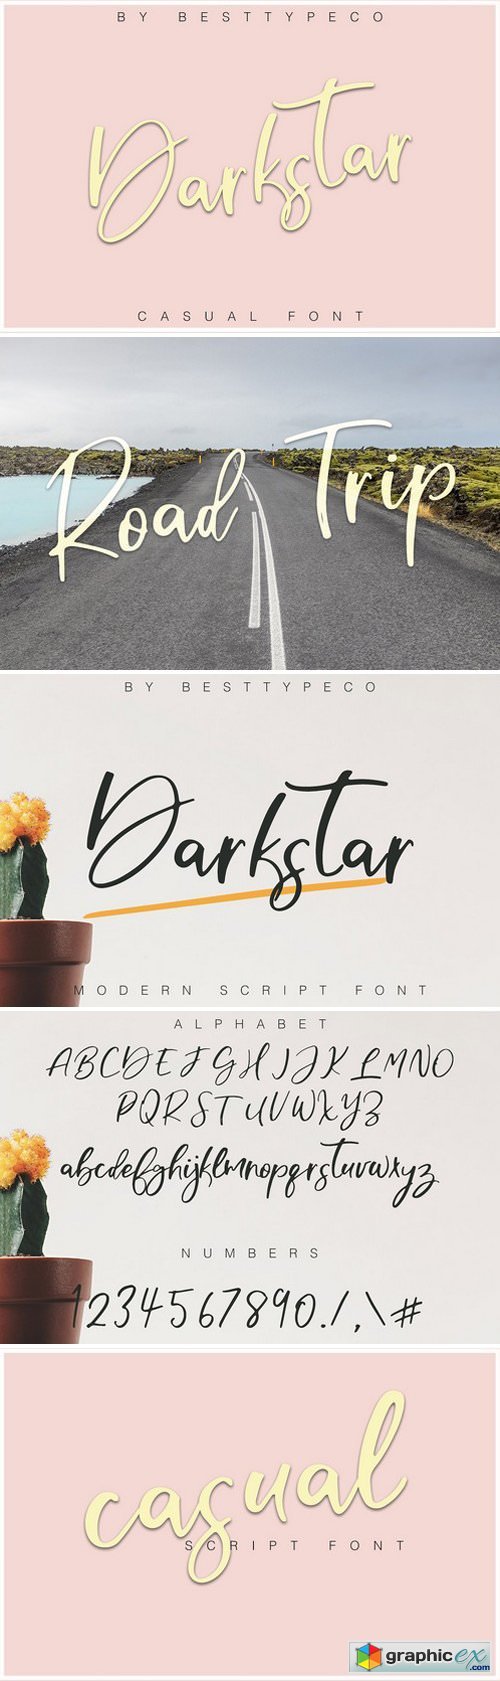 Darkstar Script Font